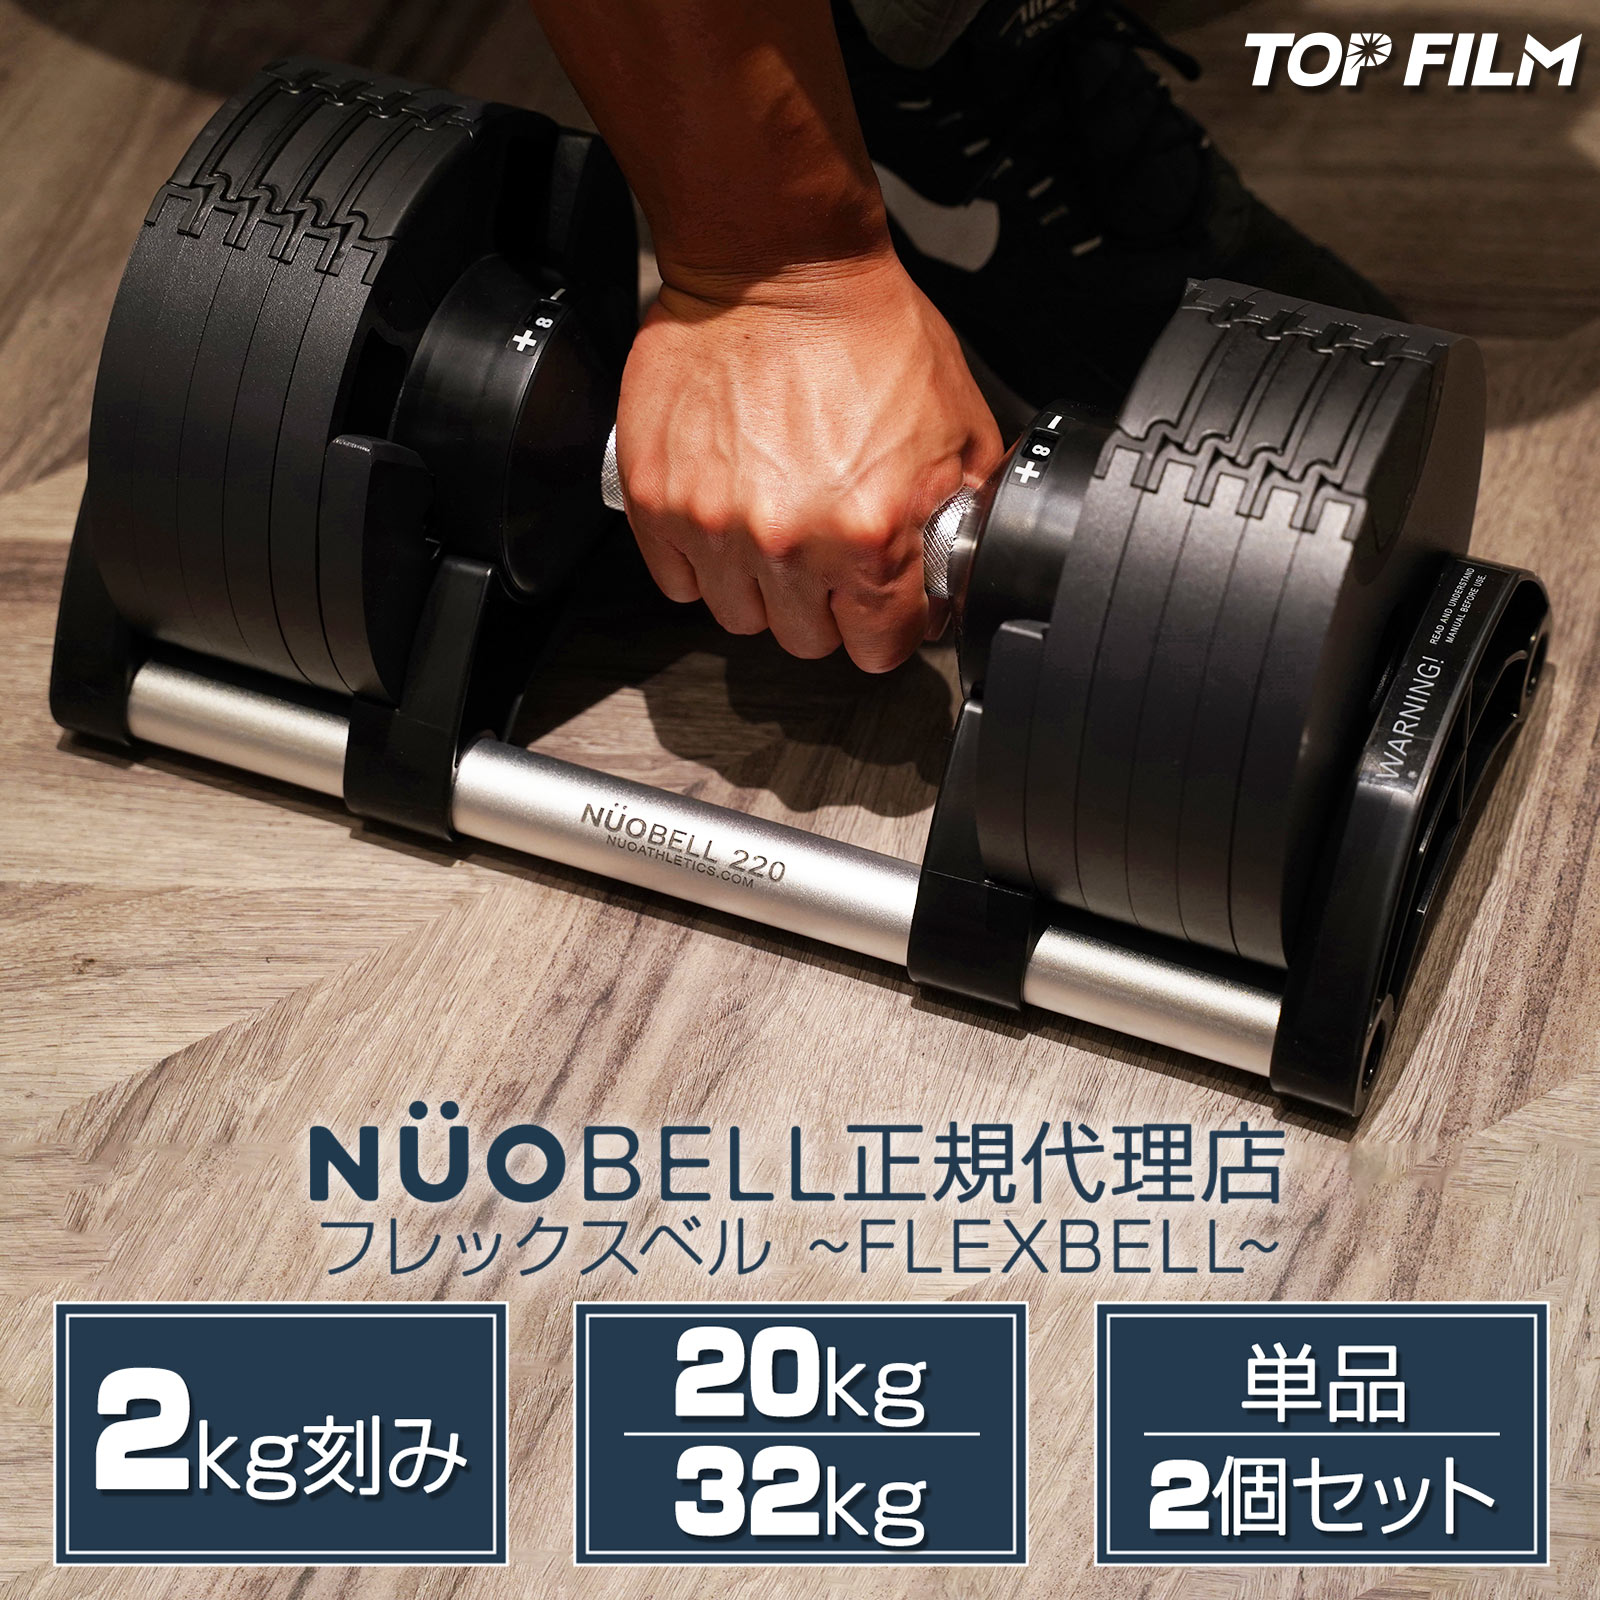 TOP FILM フレックスベル 可変式 ダンベル 重量調整 20kg 2個セット 40kg 6段階 トレーニング 筋トレ フィットネス コンパクト